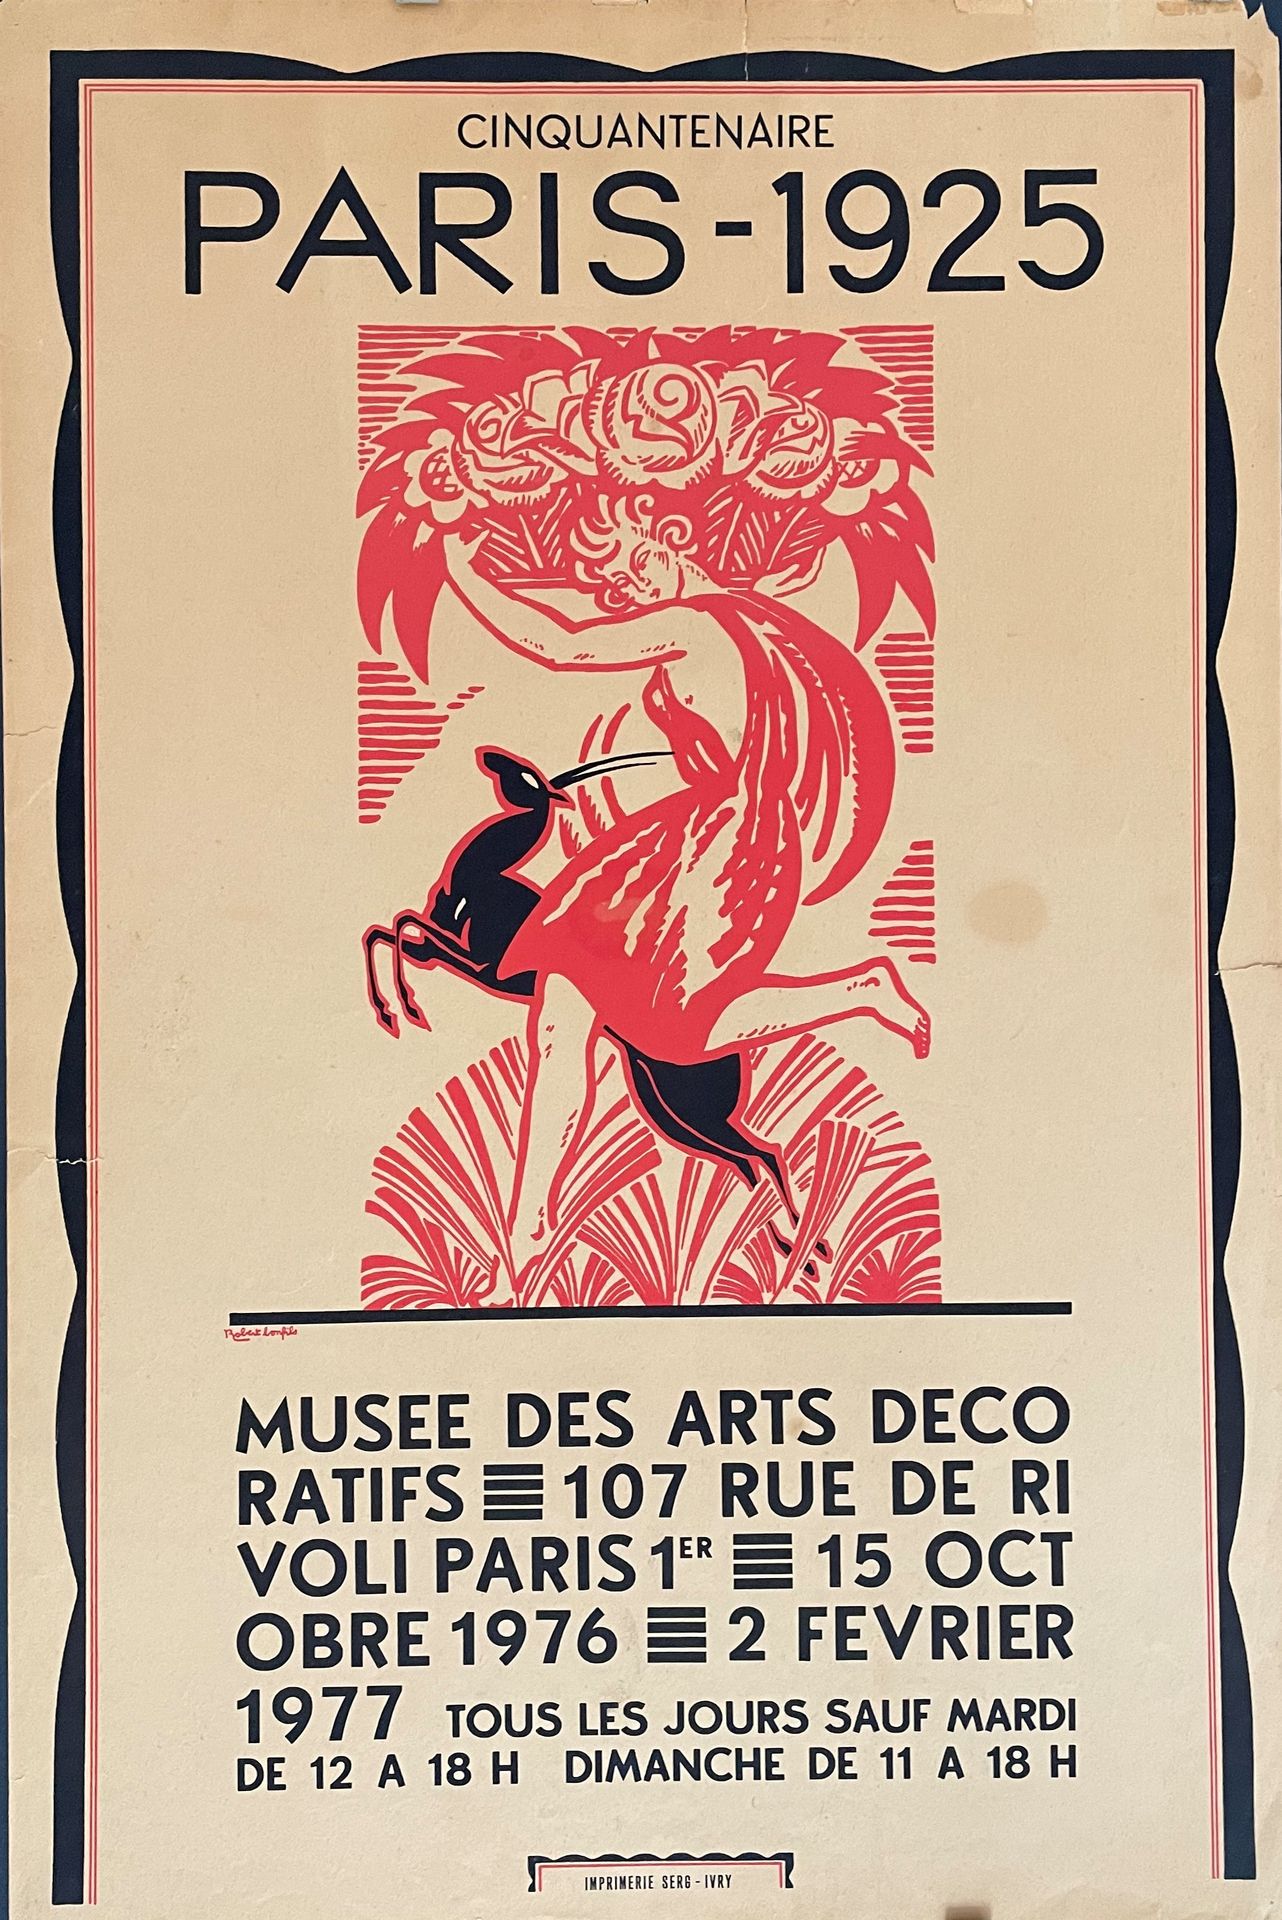 Null ROBERT BONFILS-Impprimerie SEG IVRY 海报 Cinquantenaire PARIS-1925

装饰艺术博物馆 1&hellip;